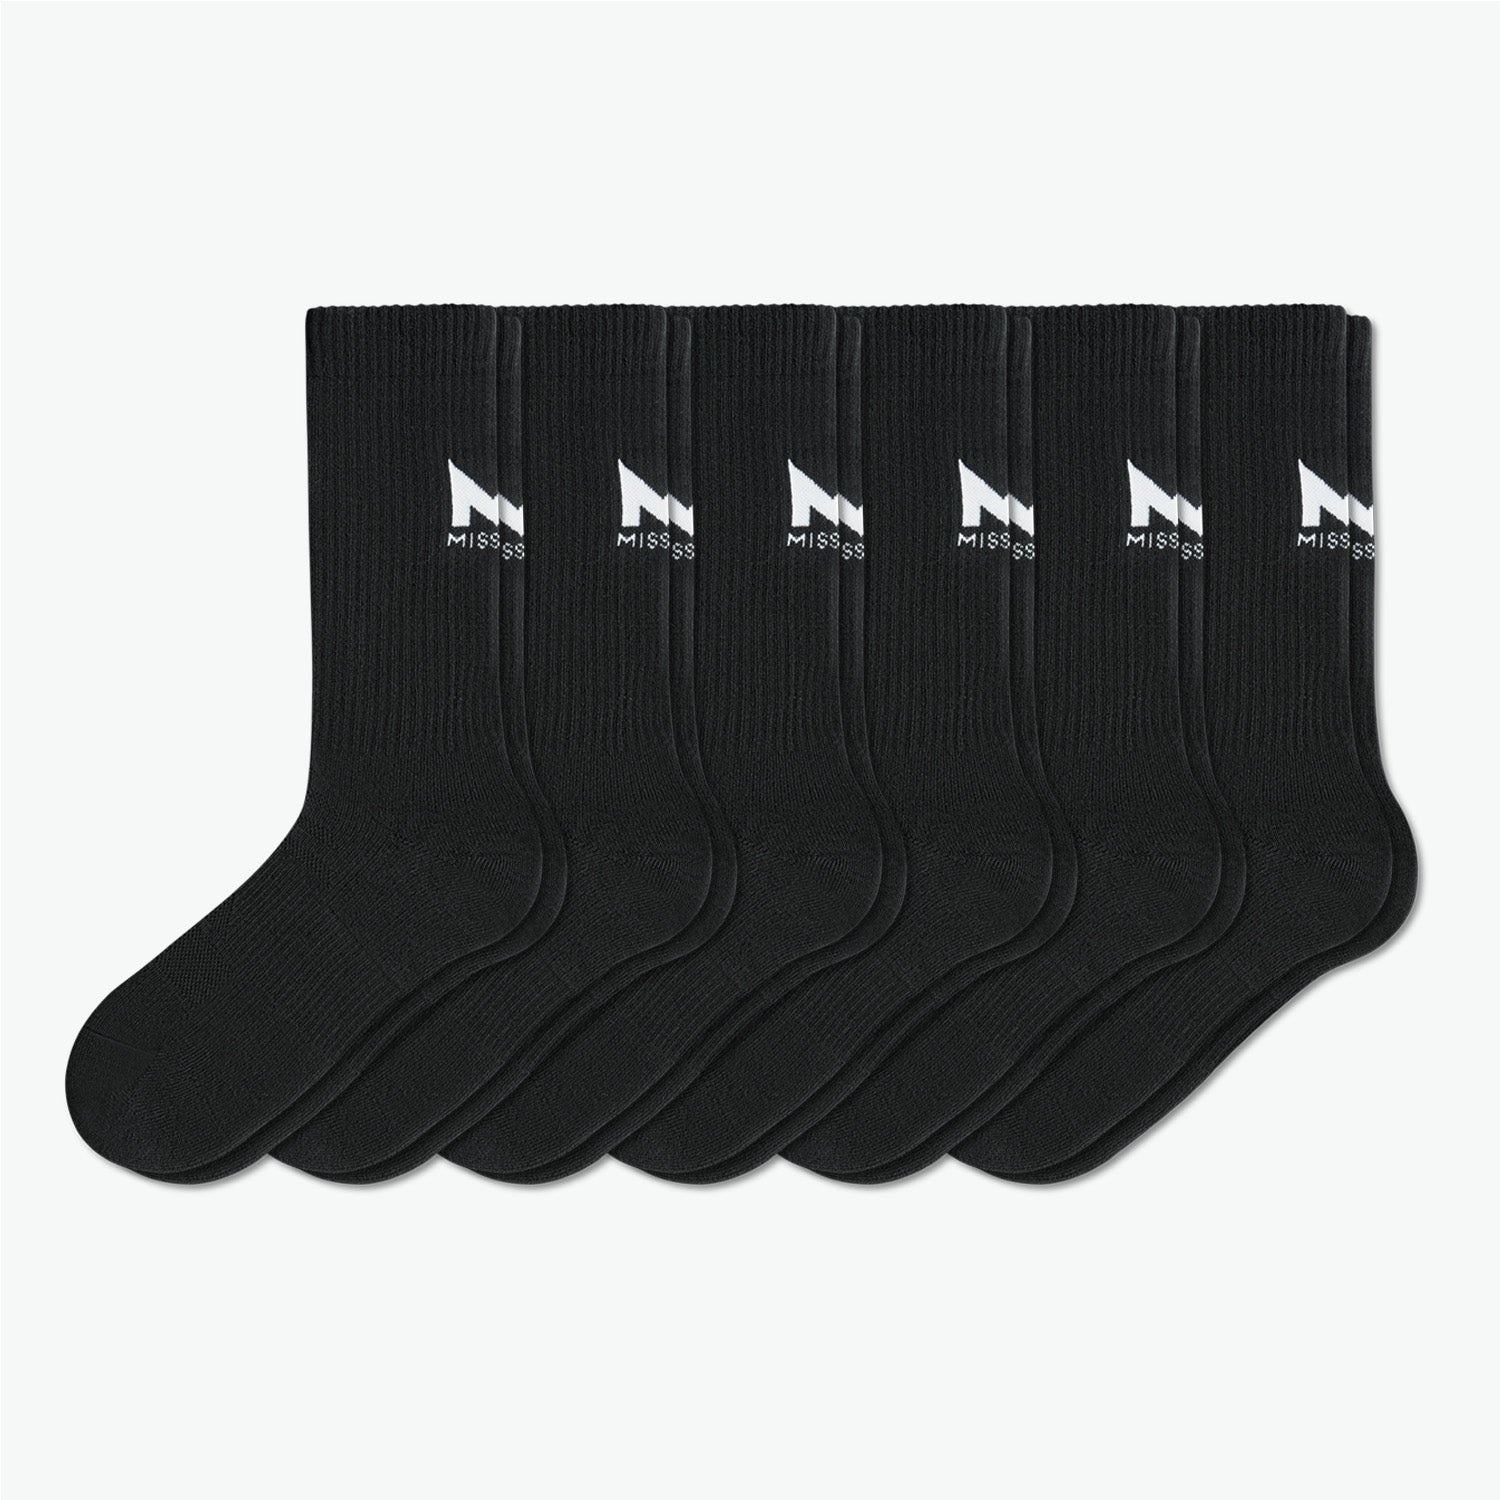 Pinnacle Dry Comfort Crew Sock 6-Pack Socks MISSION M  (US 6-8) Black 